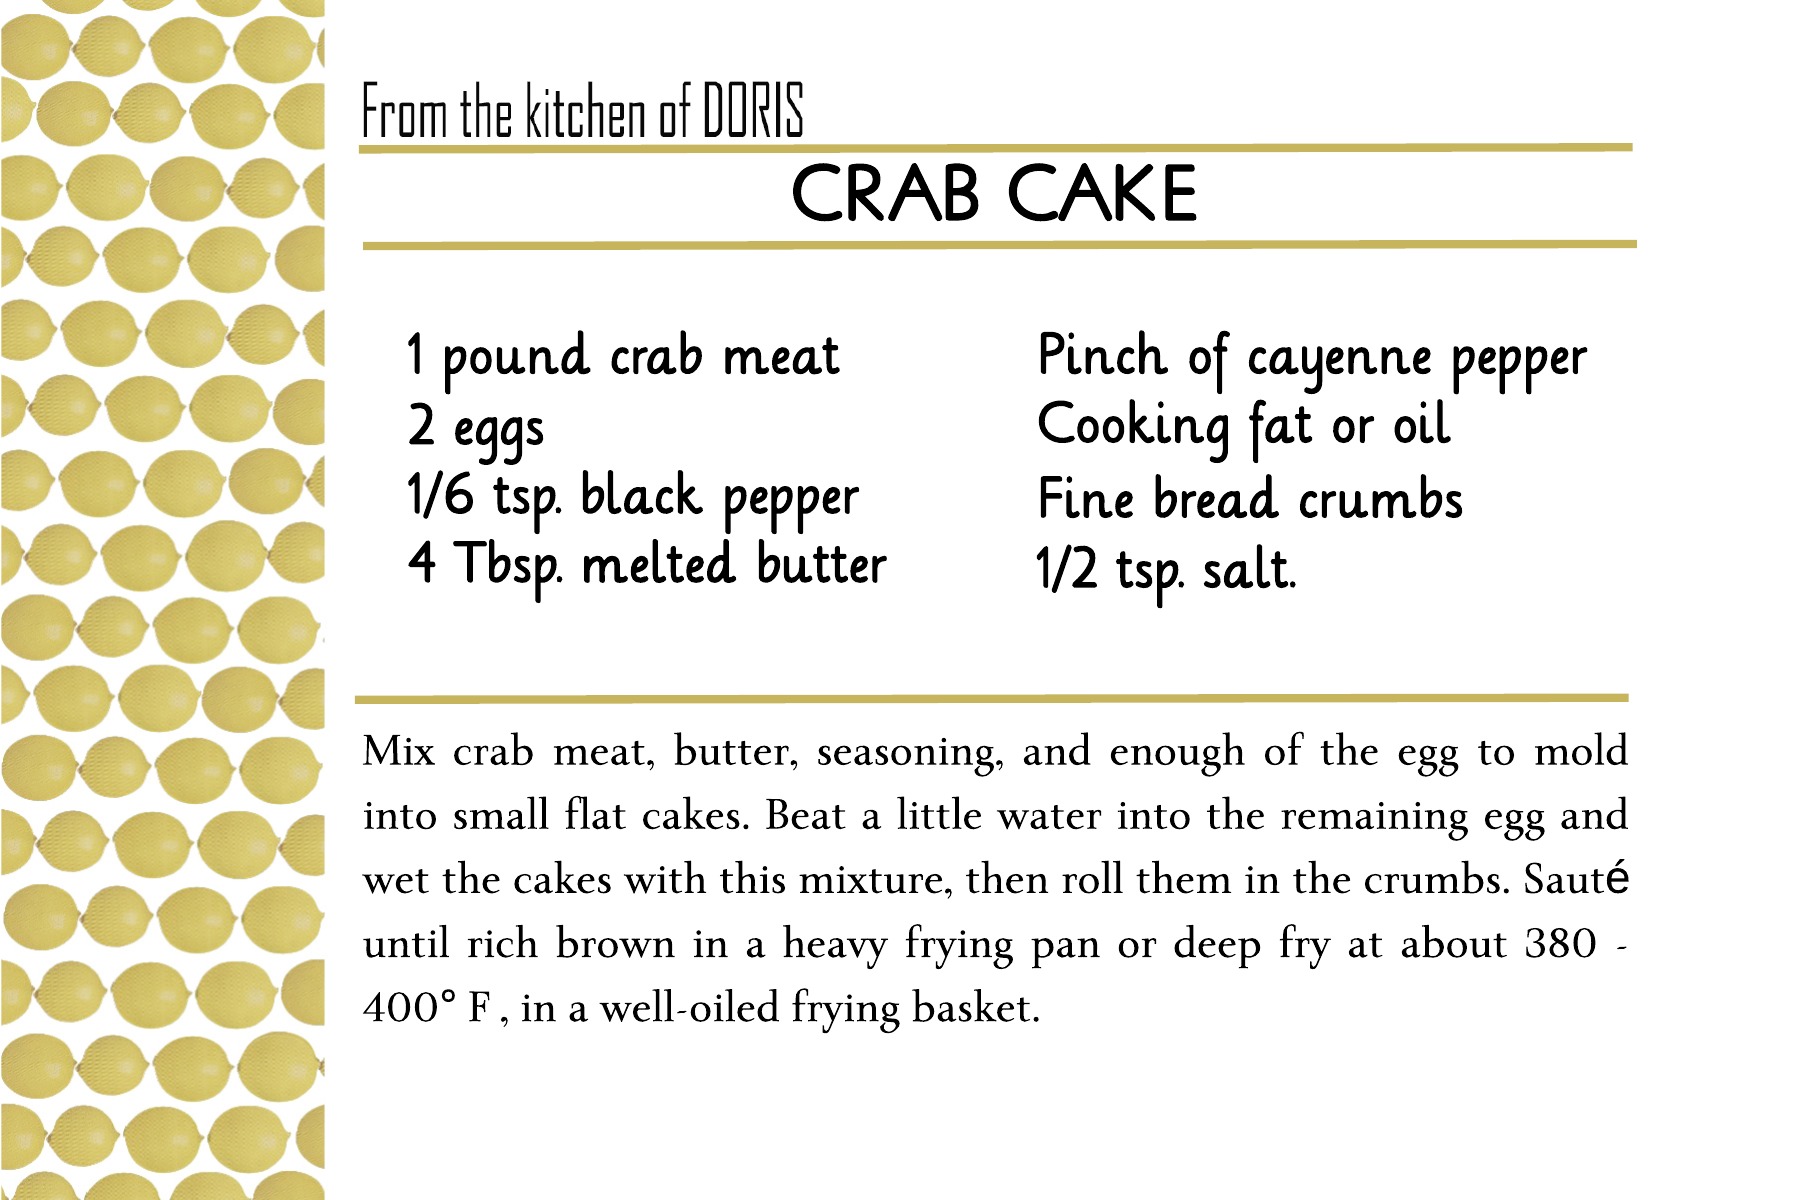 Crab Cake.jpg